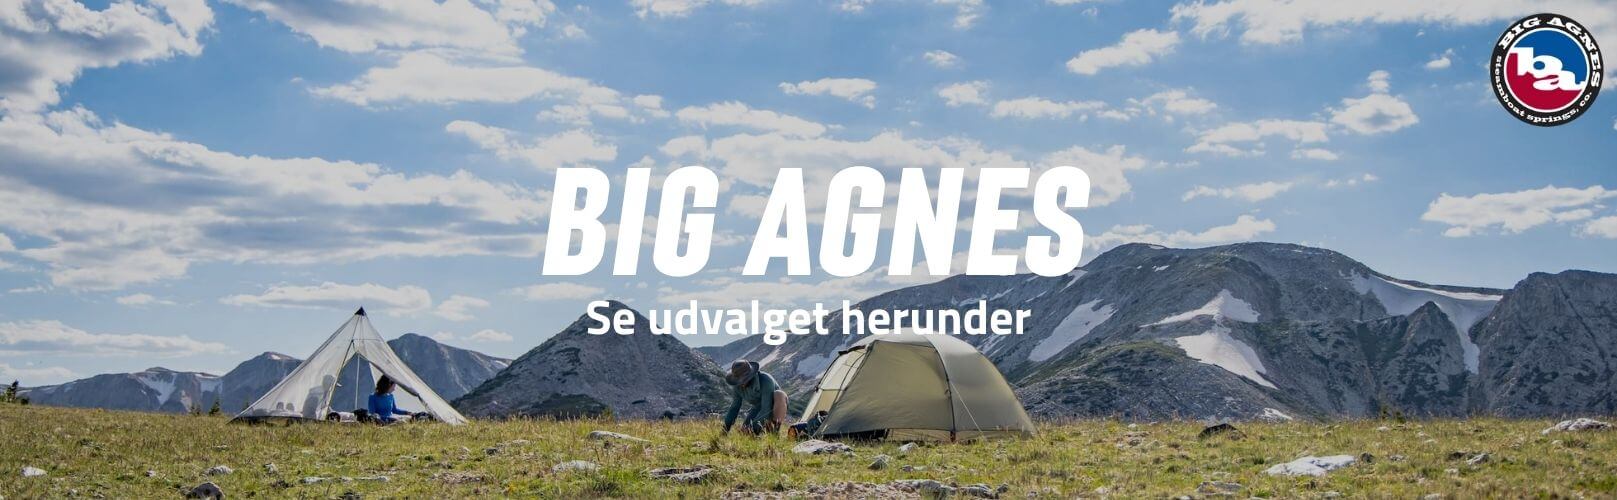 Big Agnes brand banner